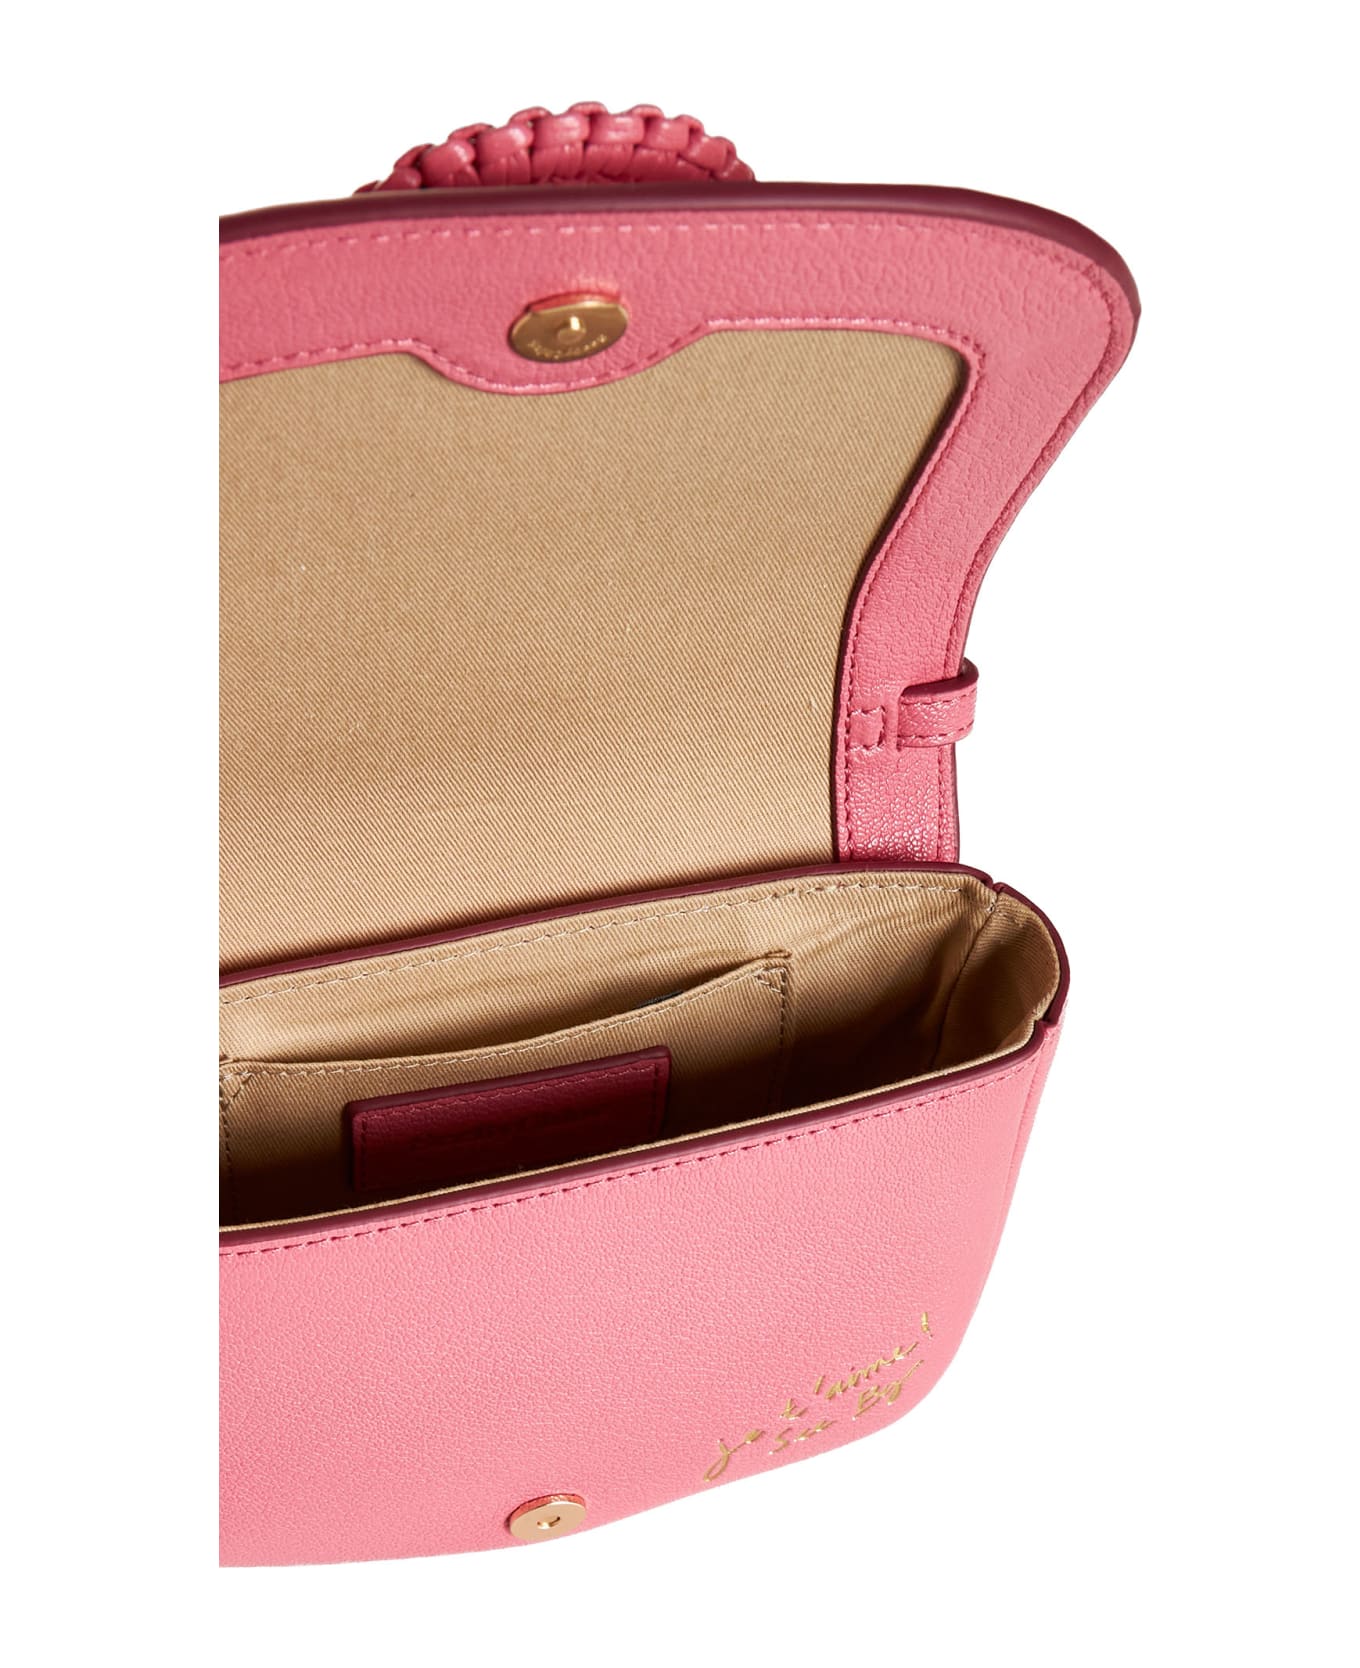 See by Chloé Shoulder Bag - Pushy pink